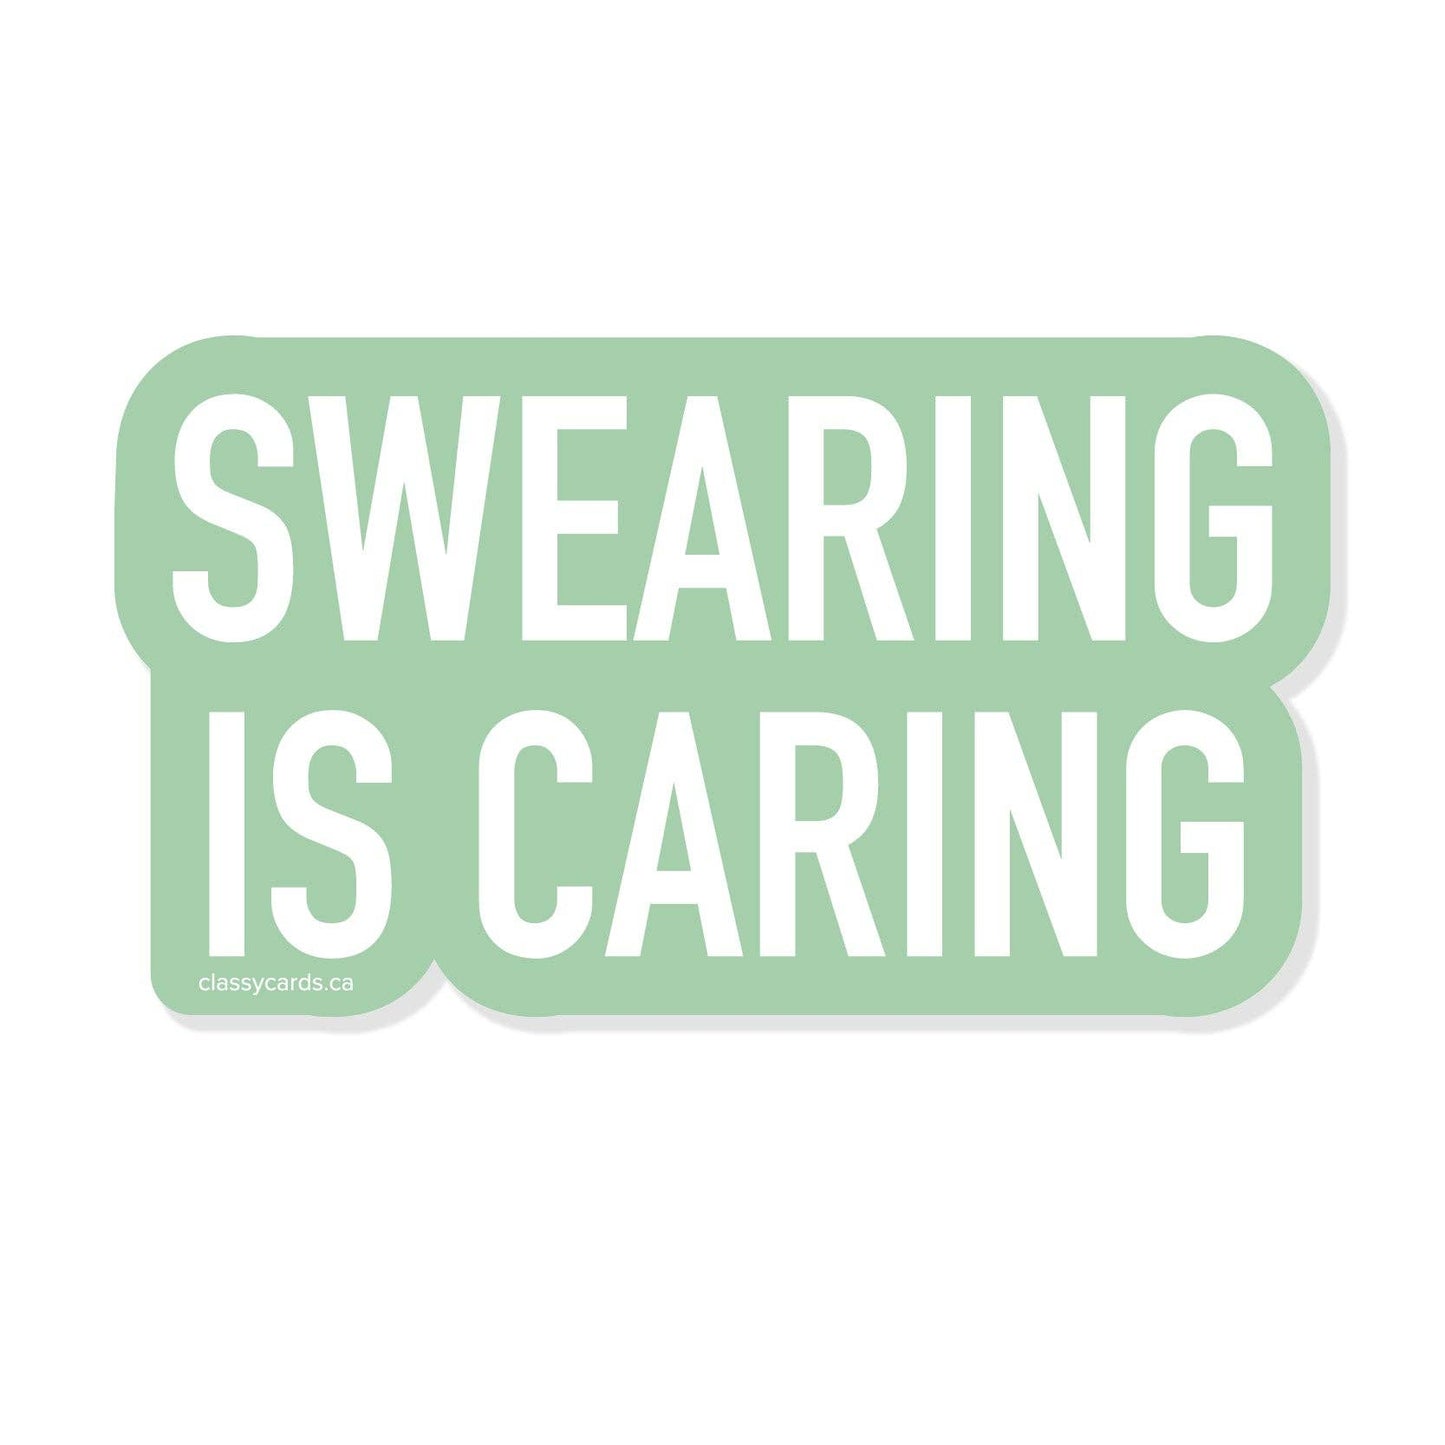 Swearing is Caring Vinyl Sticker